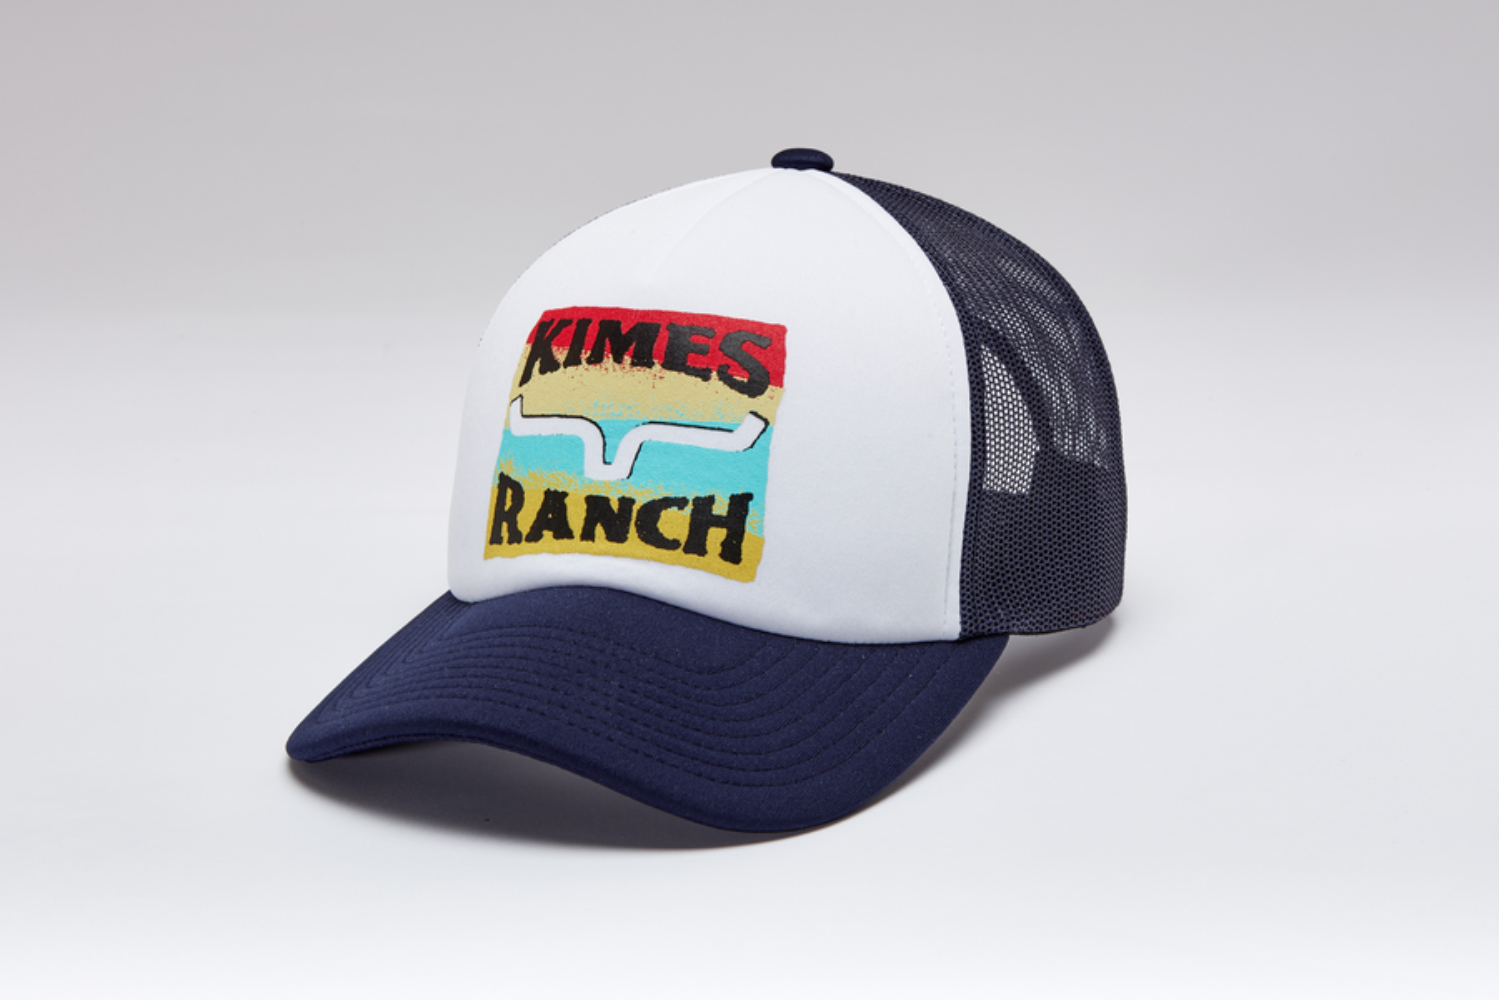 Kimes Ranch Block Party Ball Cap Navy/White